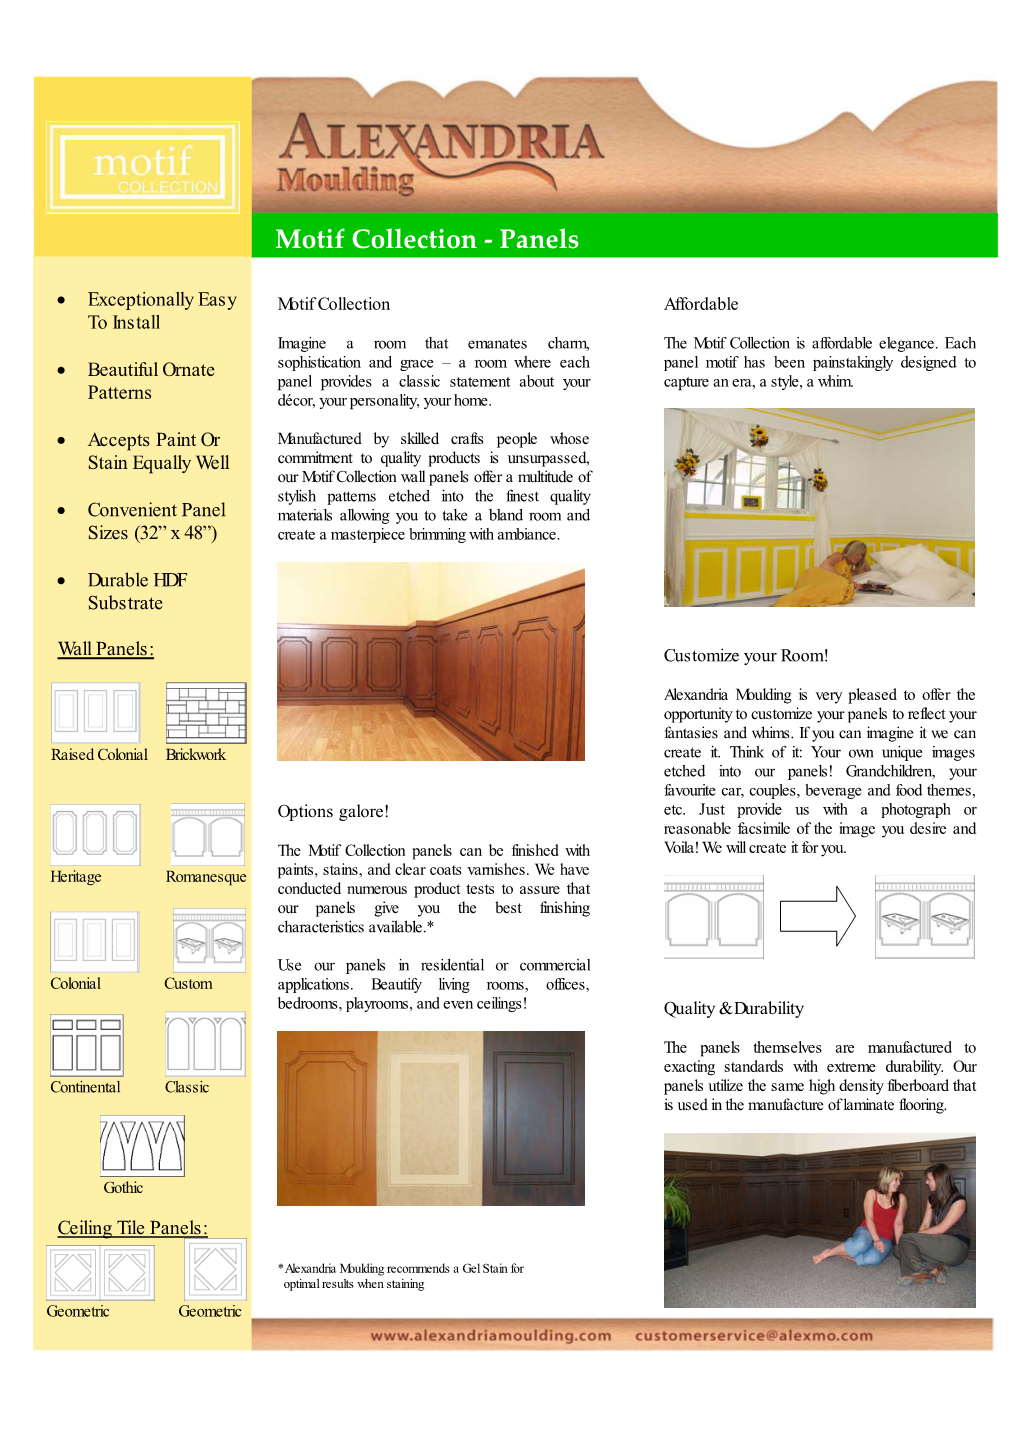 Motif Collection ‐ Panels